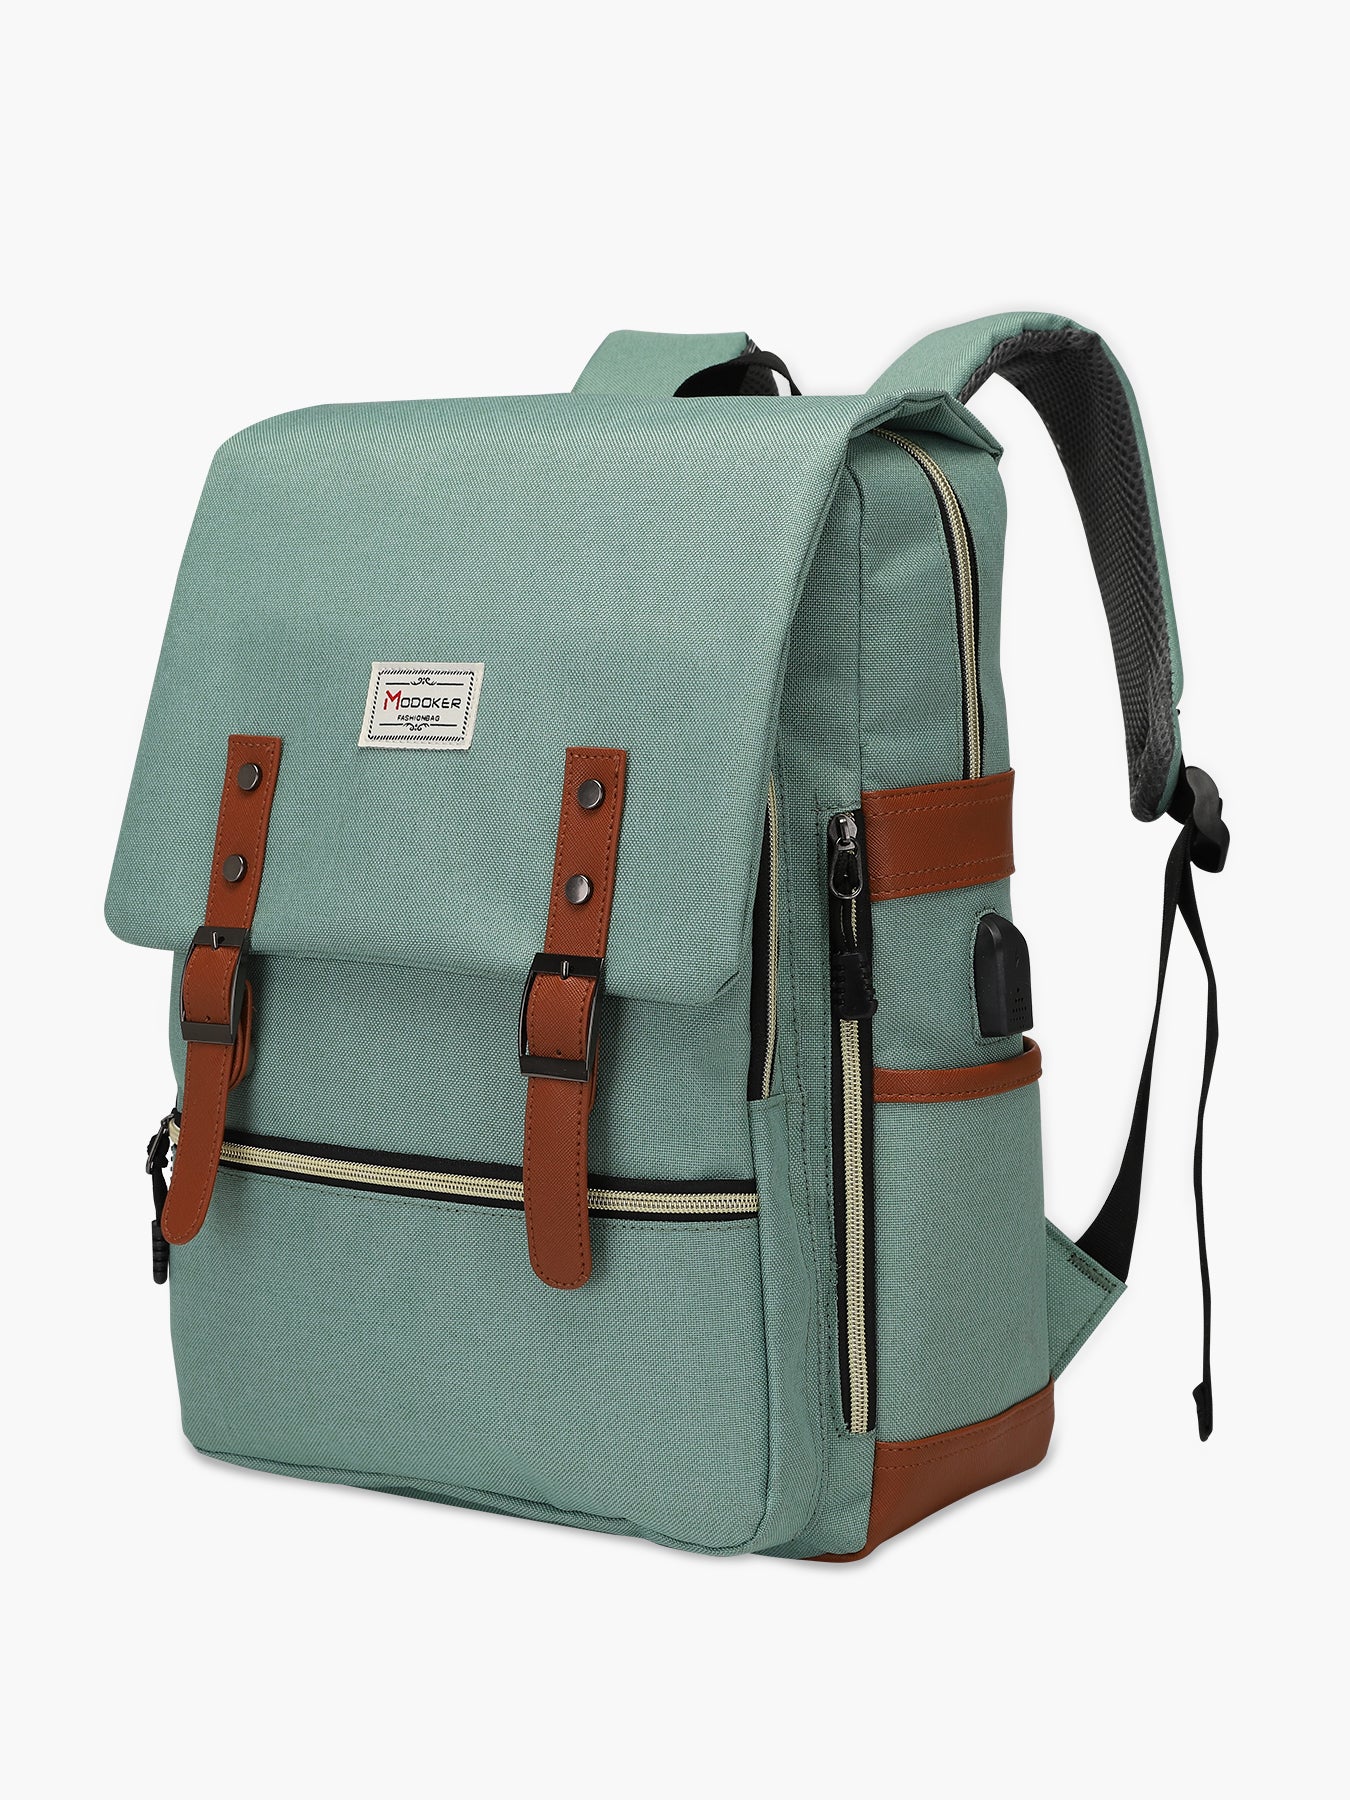 Vintage Casual Backpack for College & School | Modoker